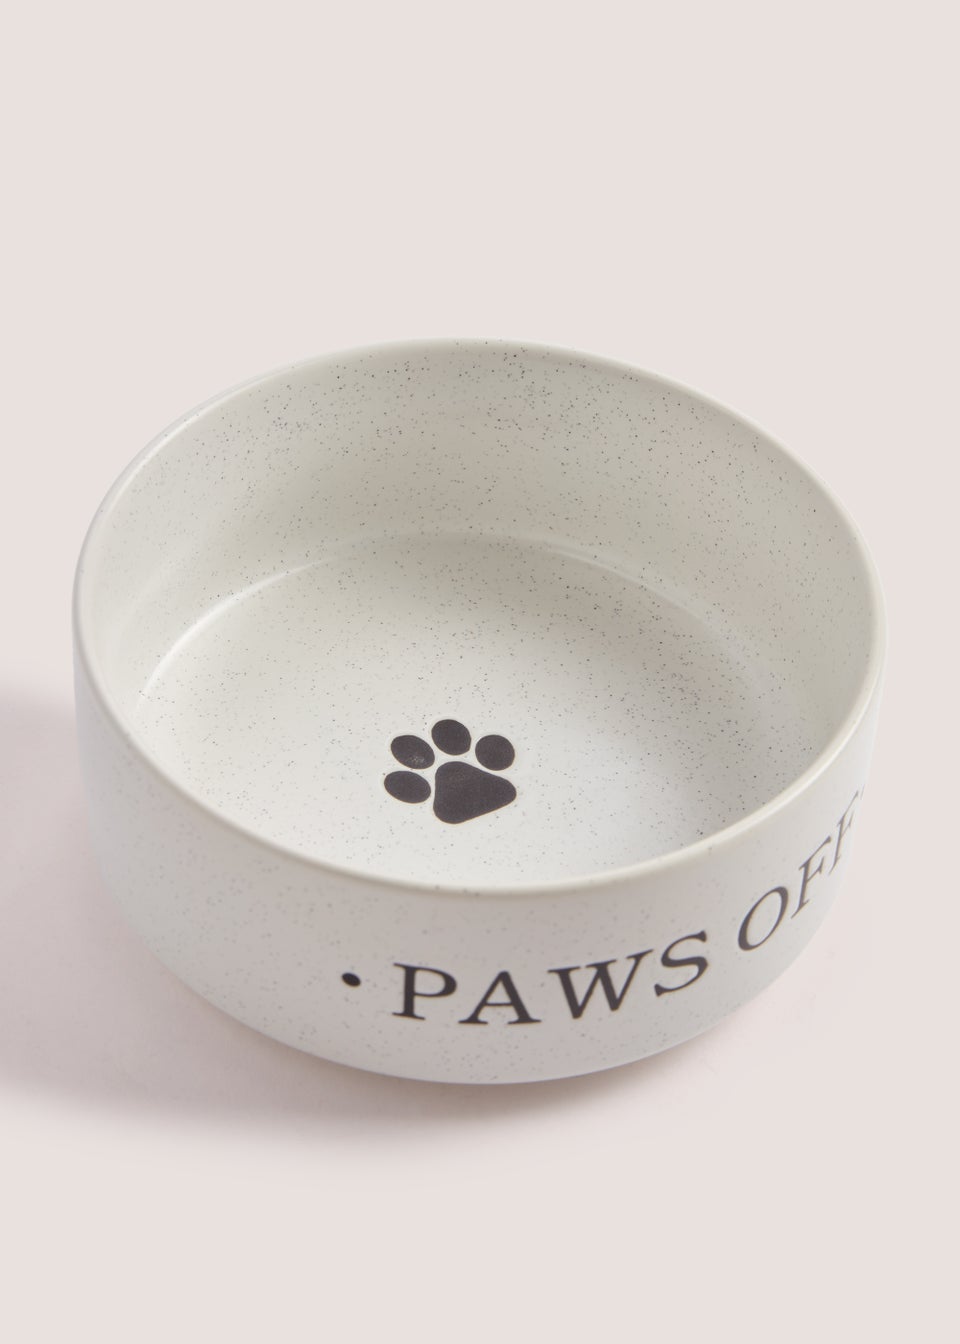 Monochrome Paws Off Ceramic Pet Bowl (15cm x 15cm x 6cm)